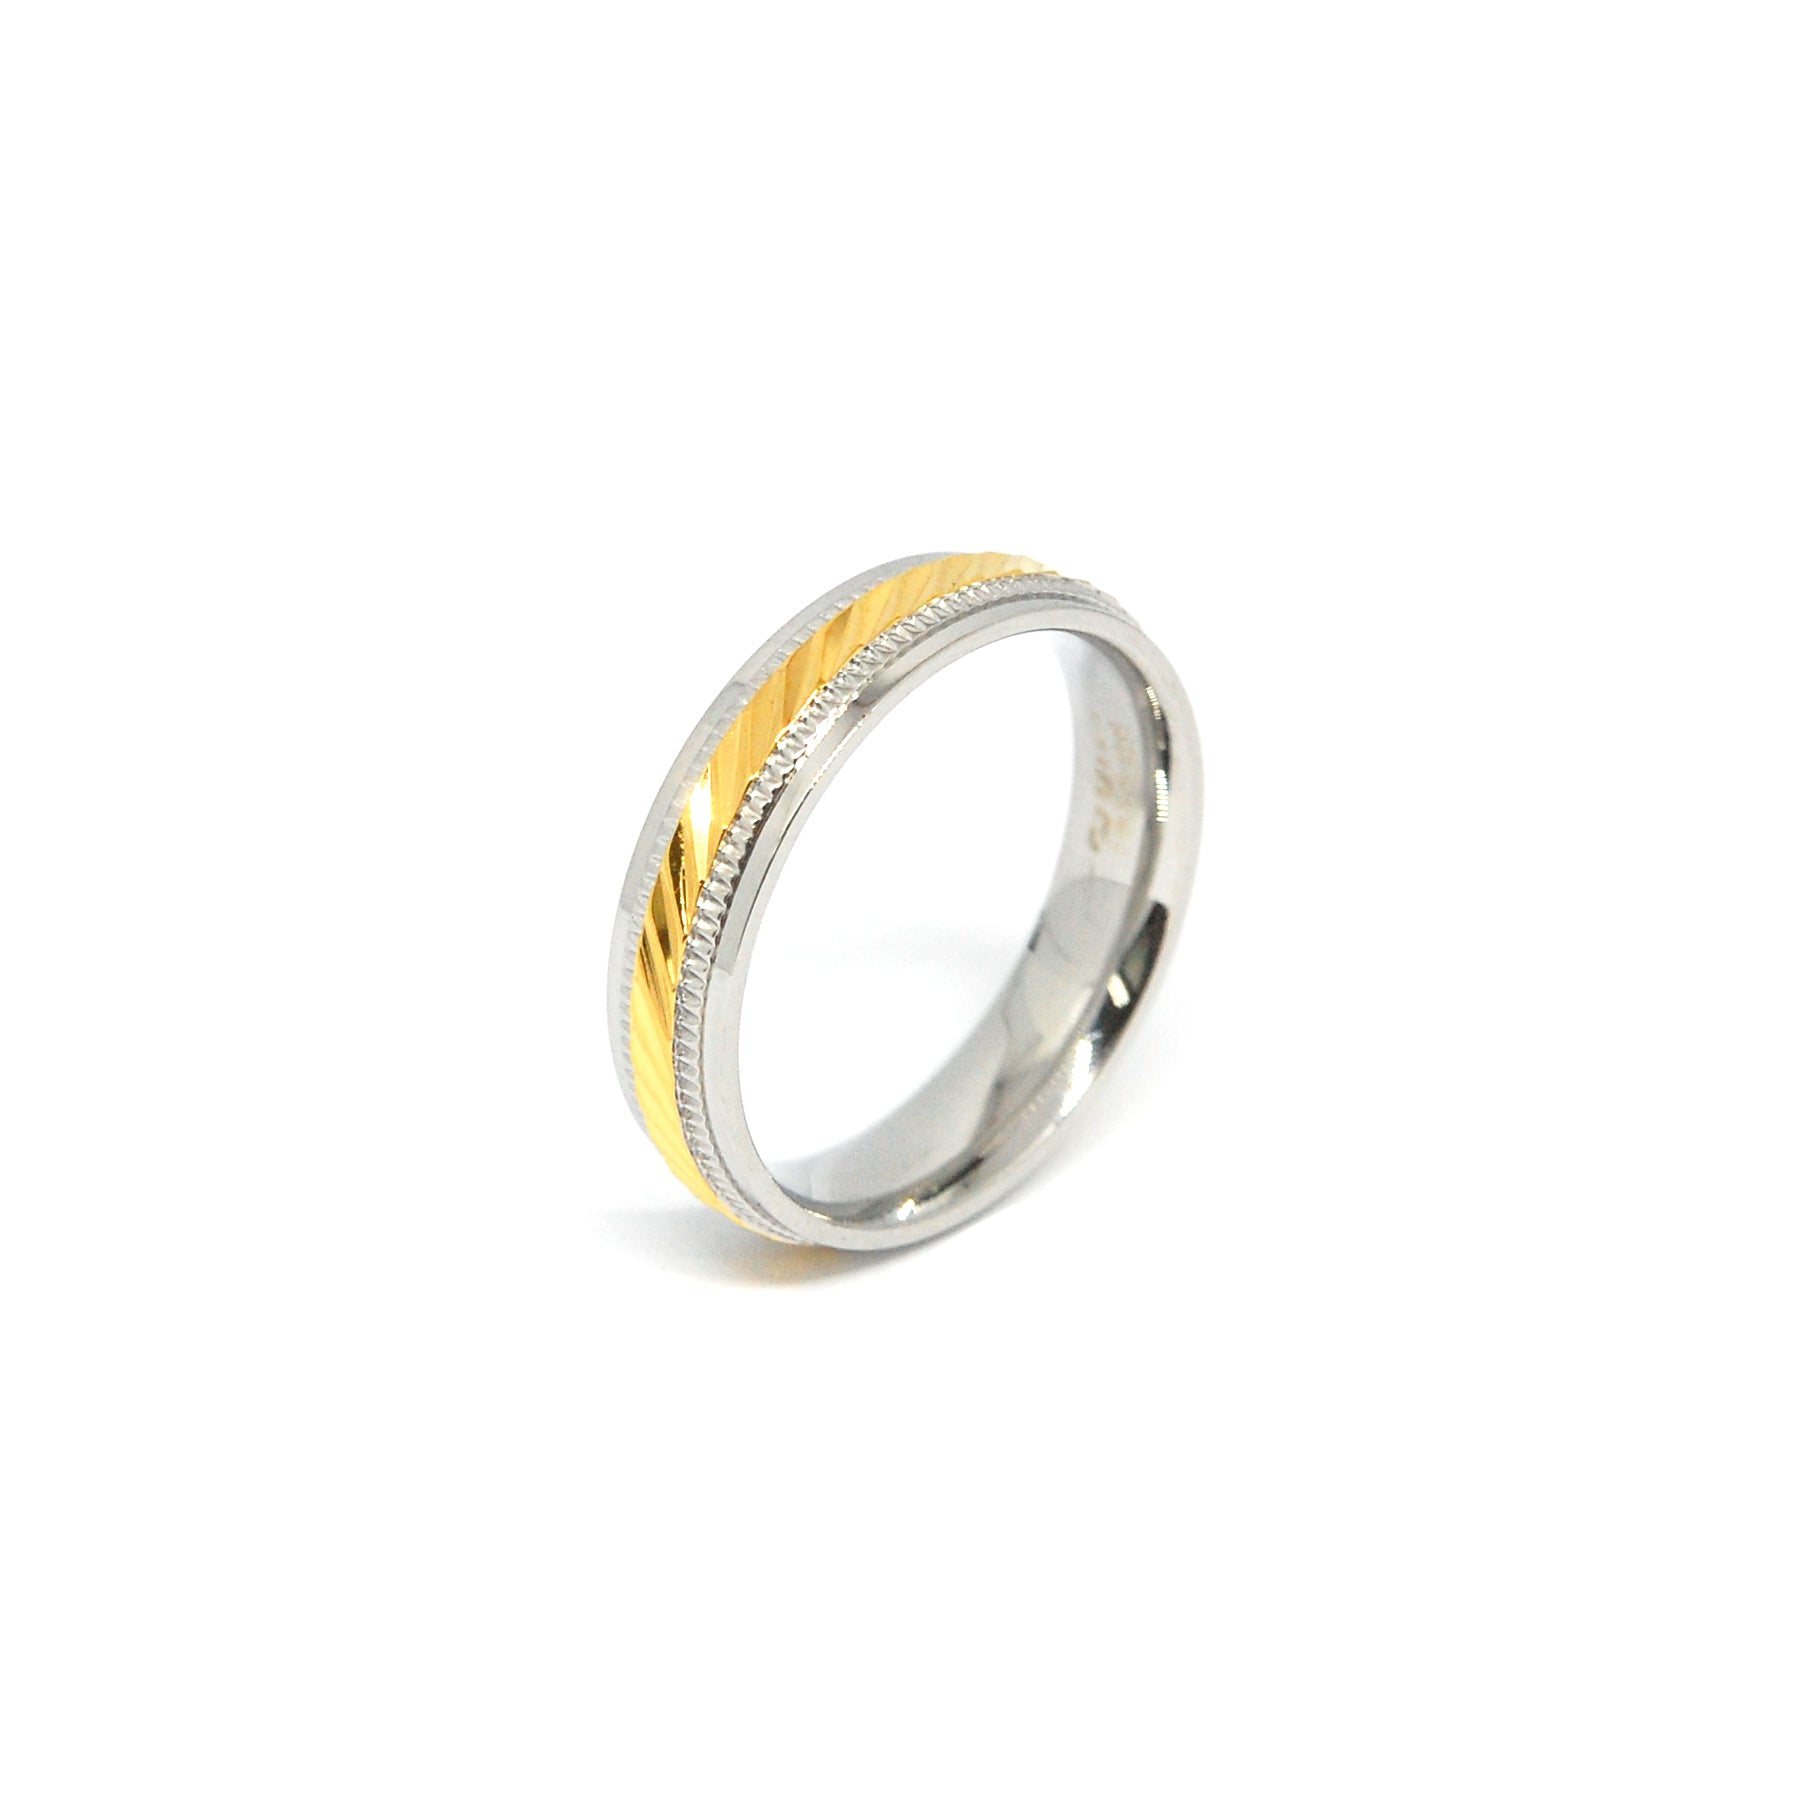 ESR 7803: Jolie Glossy Ring w/ Gold Diacut Ctr & Milgrain